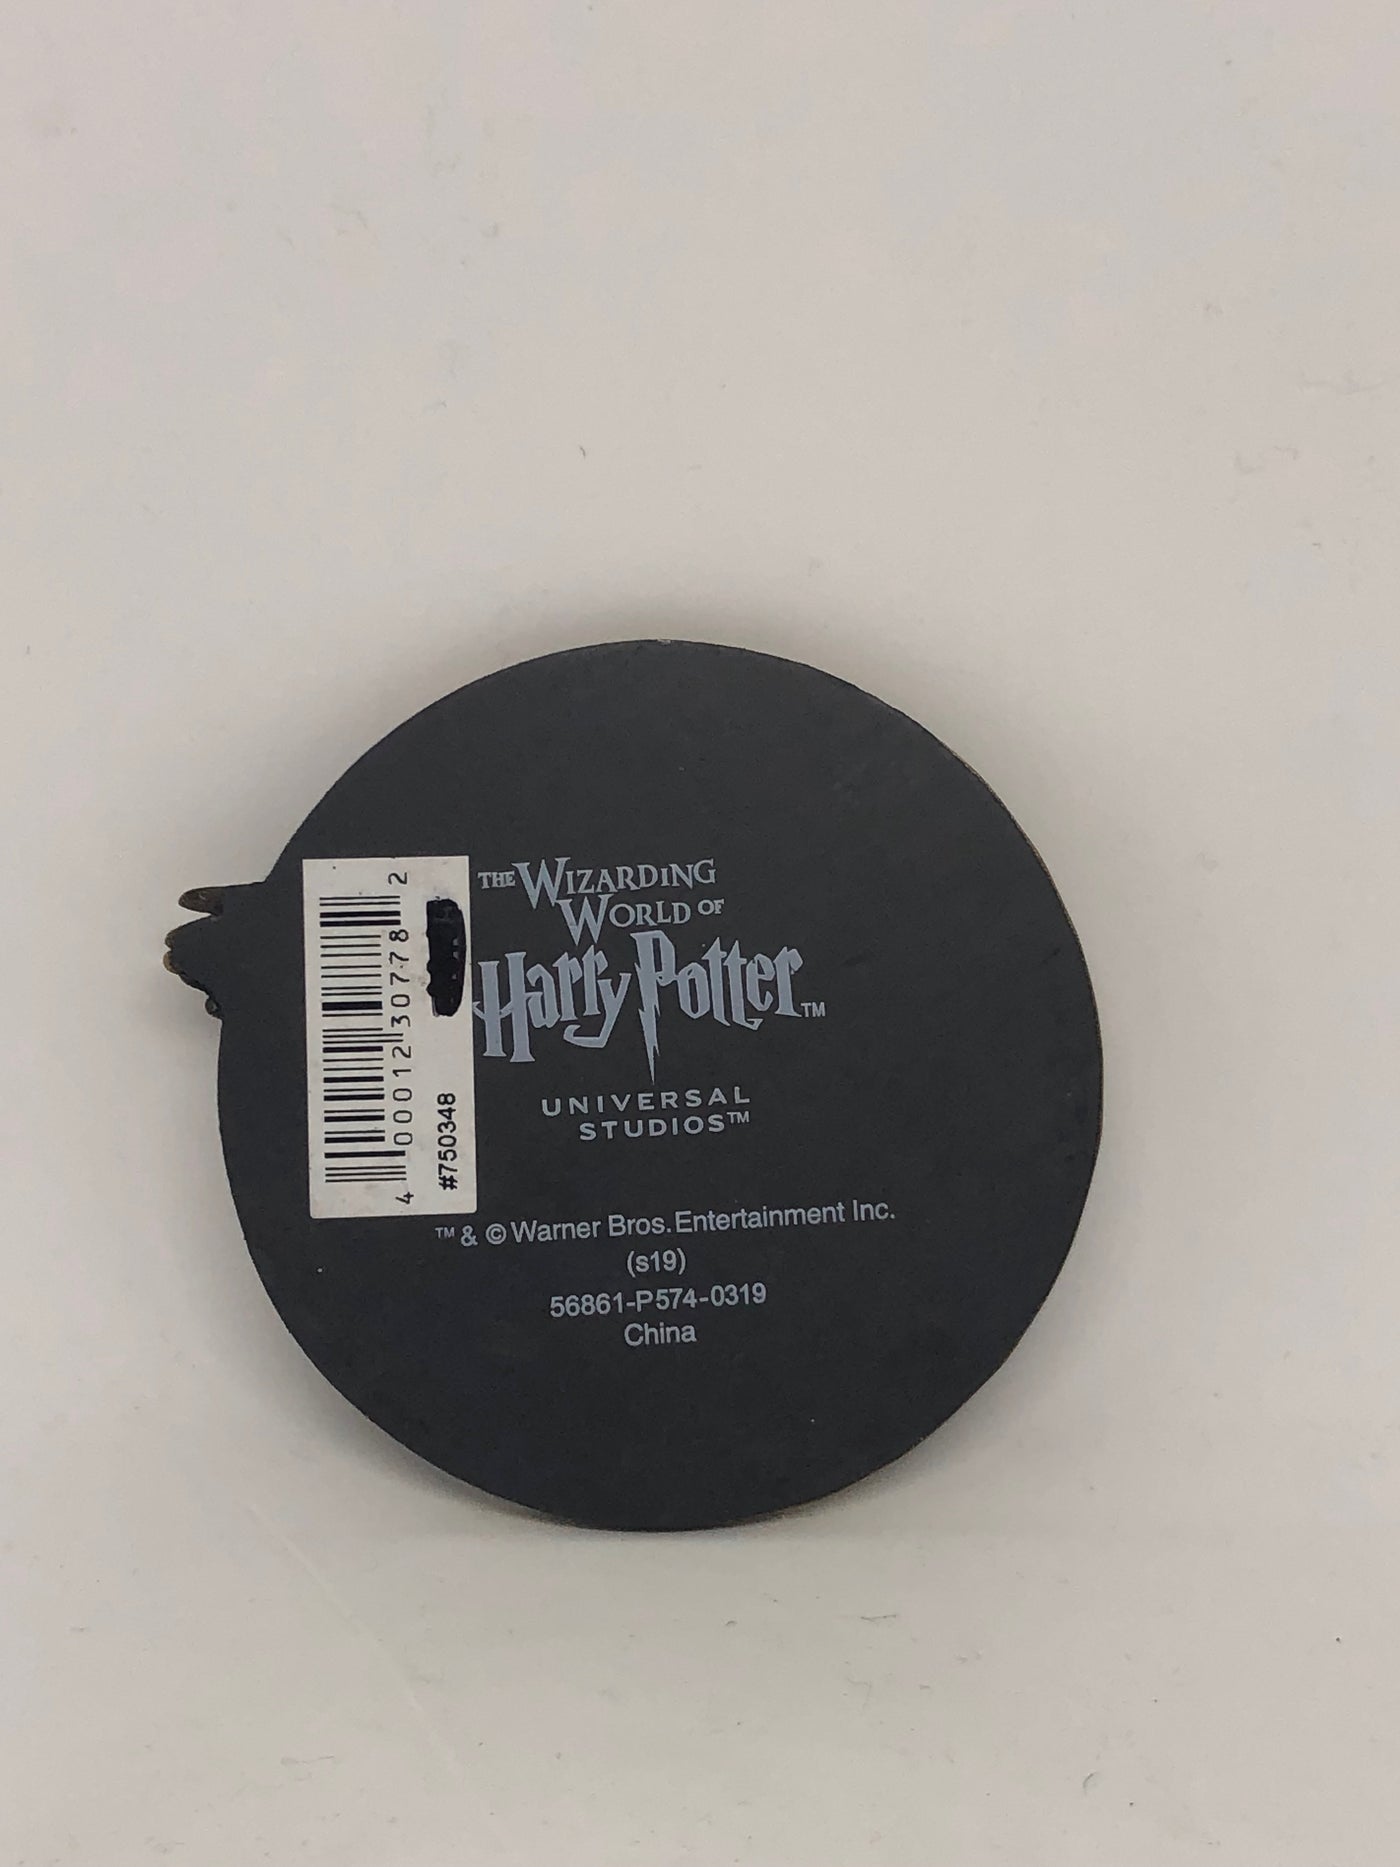 Universal Studios Harry Potter Department of Magical Creatures Magnet New